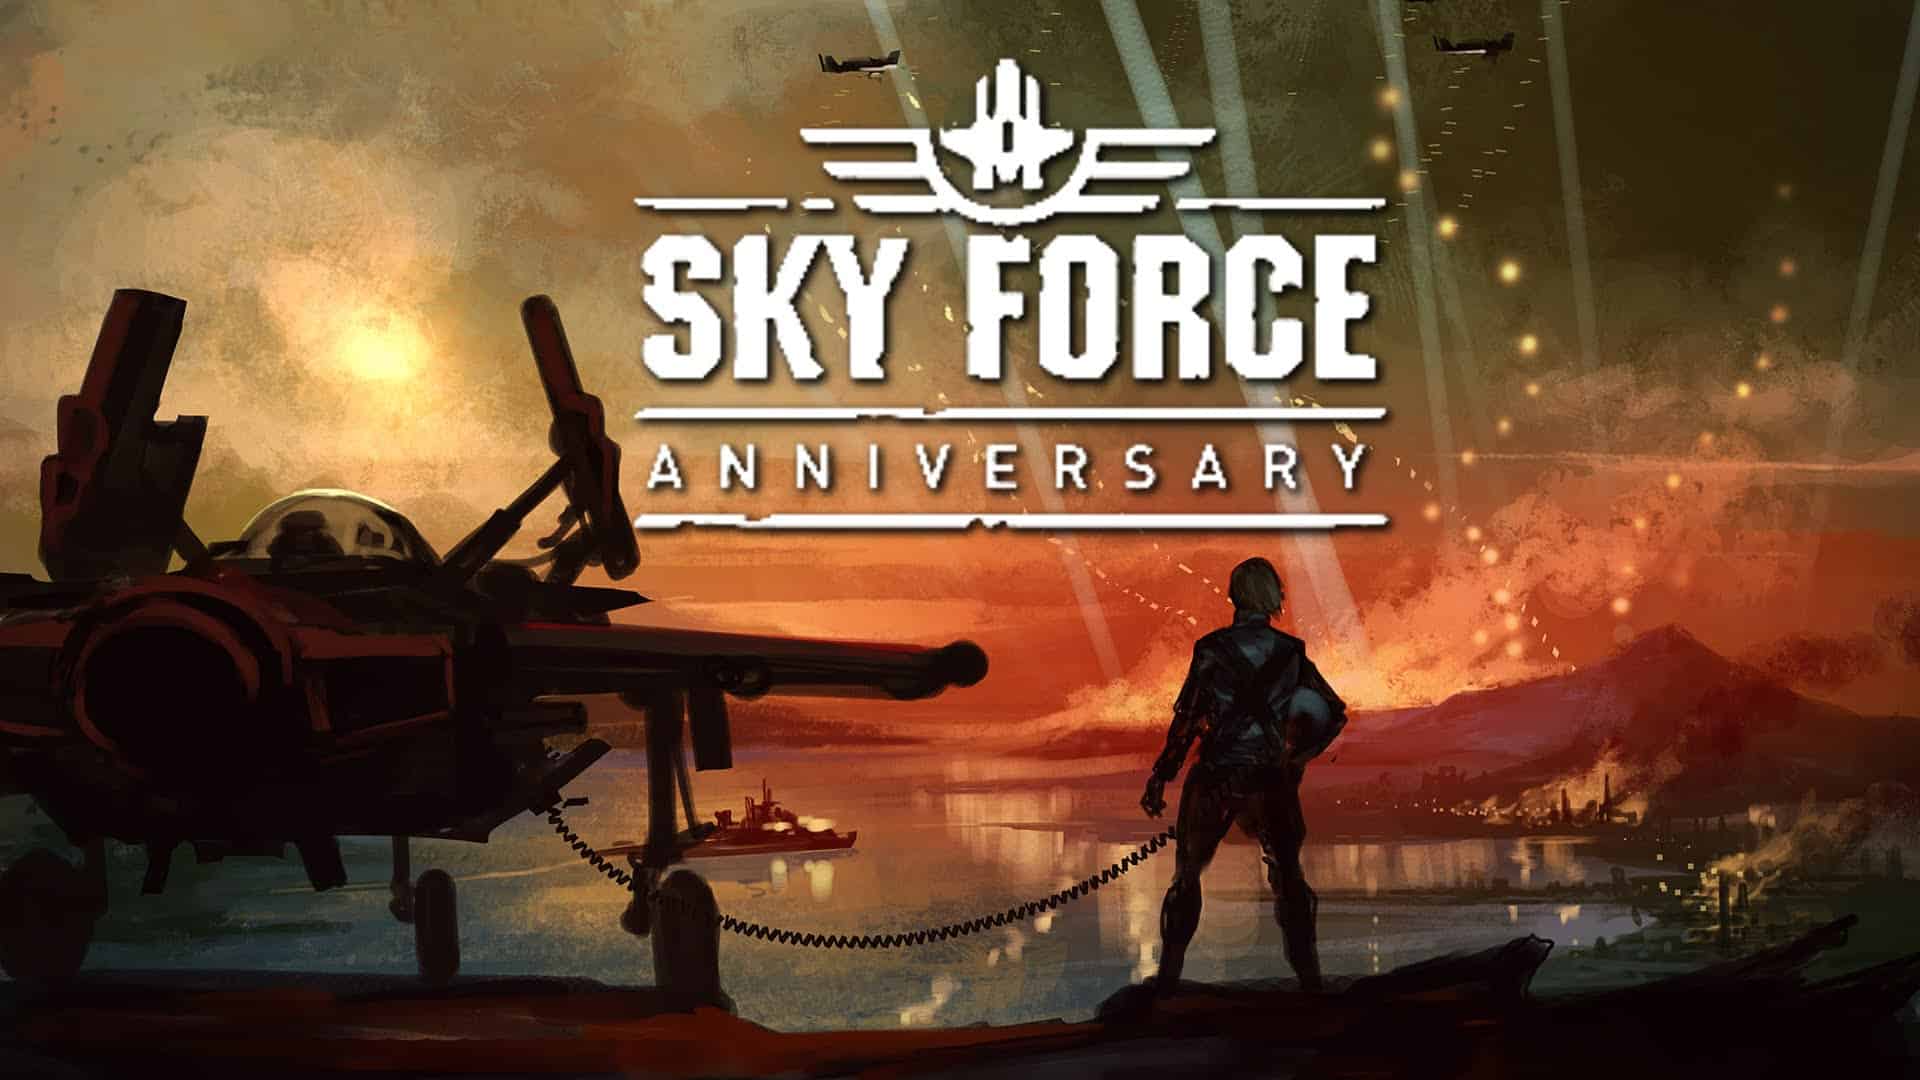 A Sky Force Anniversary • AmigaGuru's GamerBlog